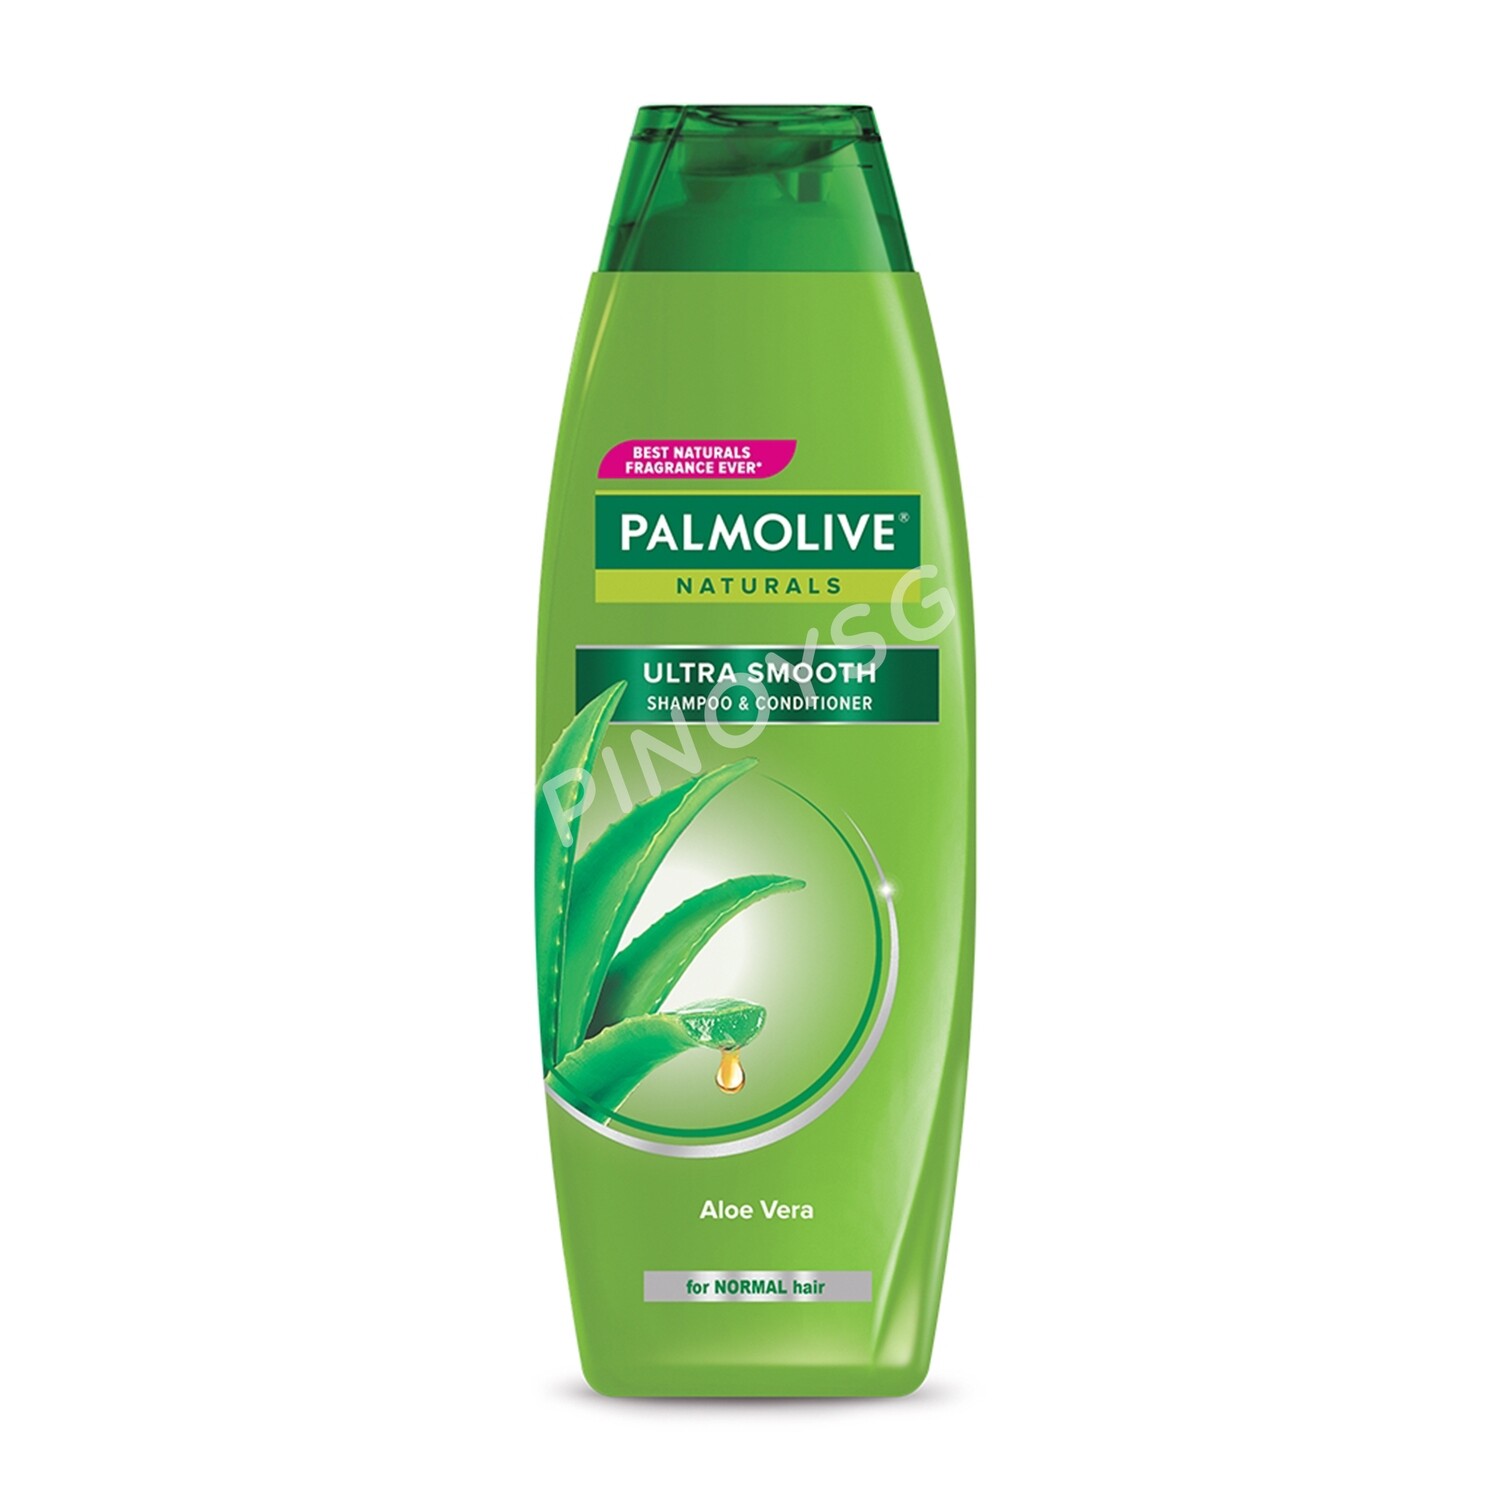 Palmolive Naturals Ultra Smooth Shampoo & Conditioner Aloe Vera, 350ml